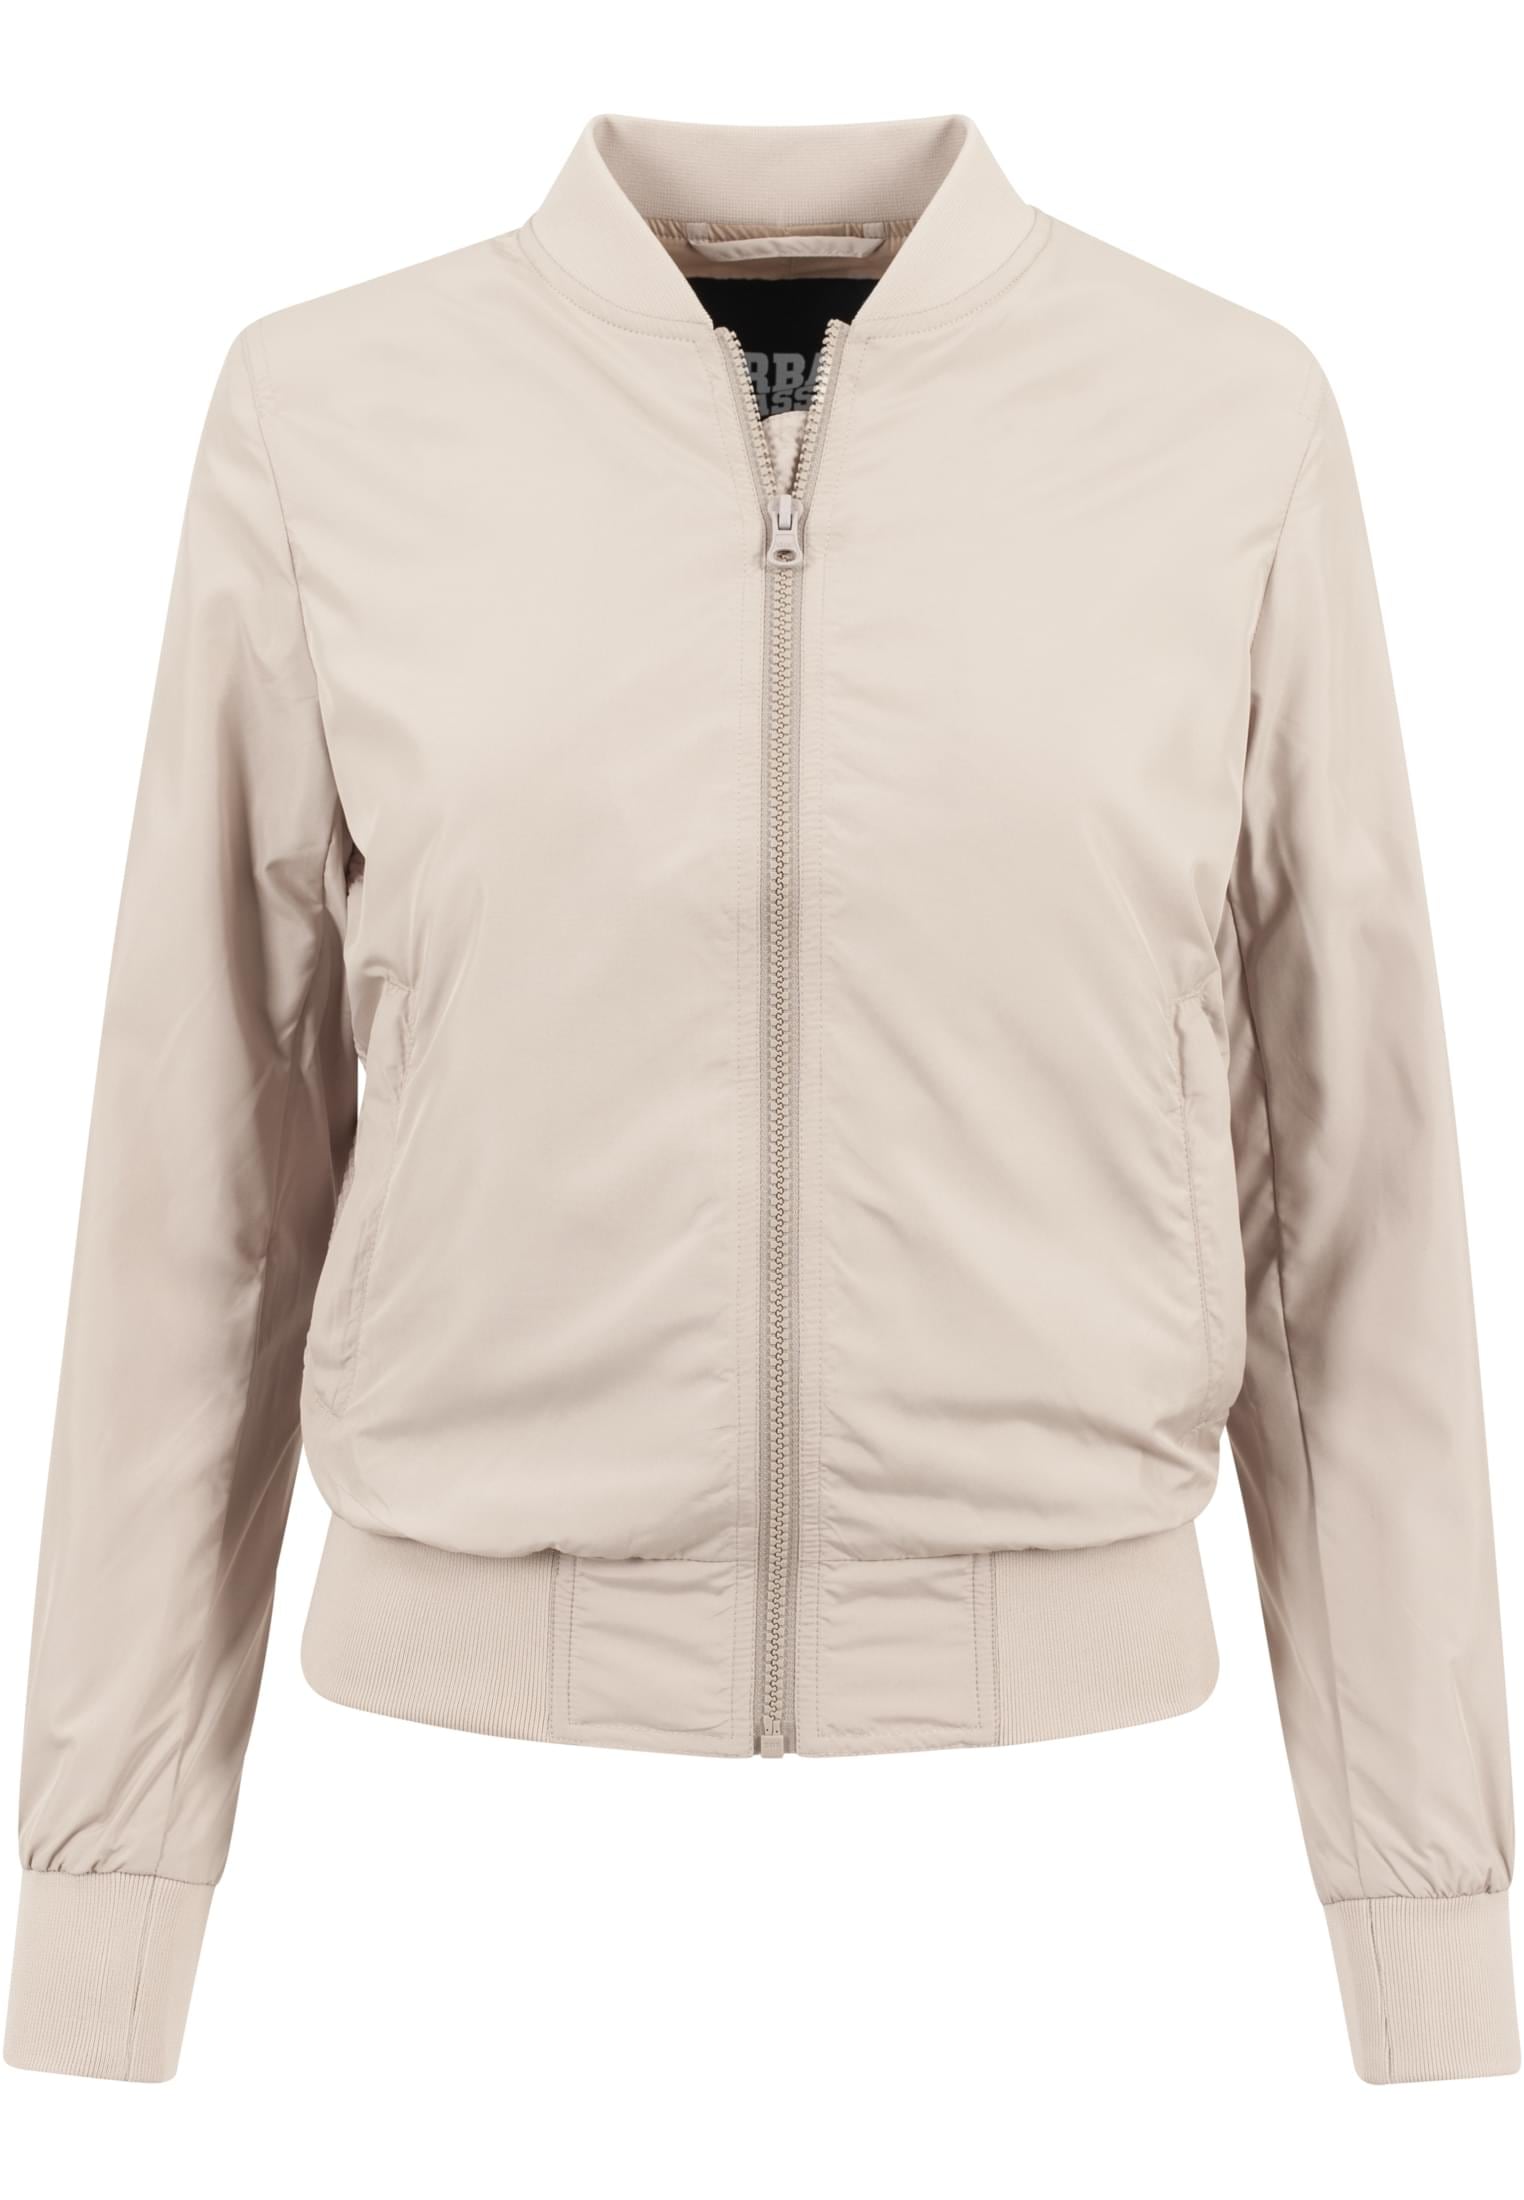 URBAN CLASSICS Outdoorjacke »Damen Ladies Light Bomber Jacket«, (1 St.)  kaufen